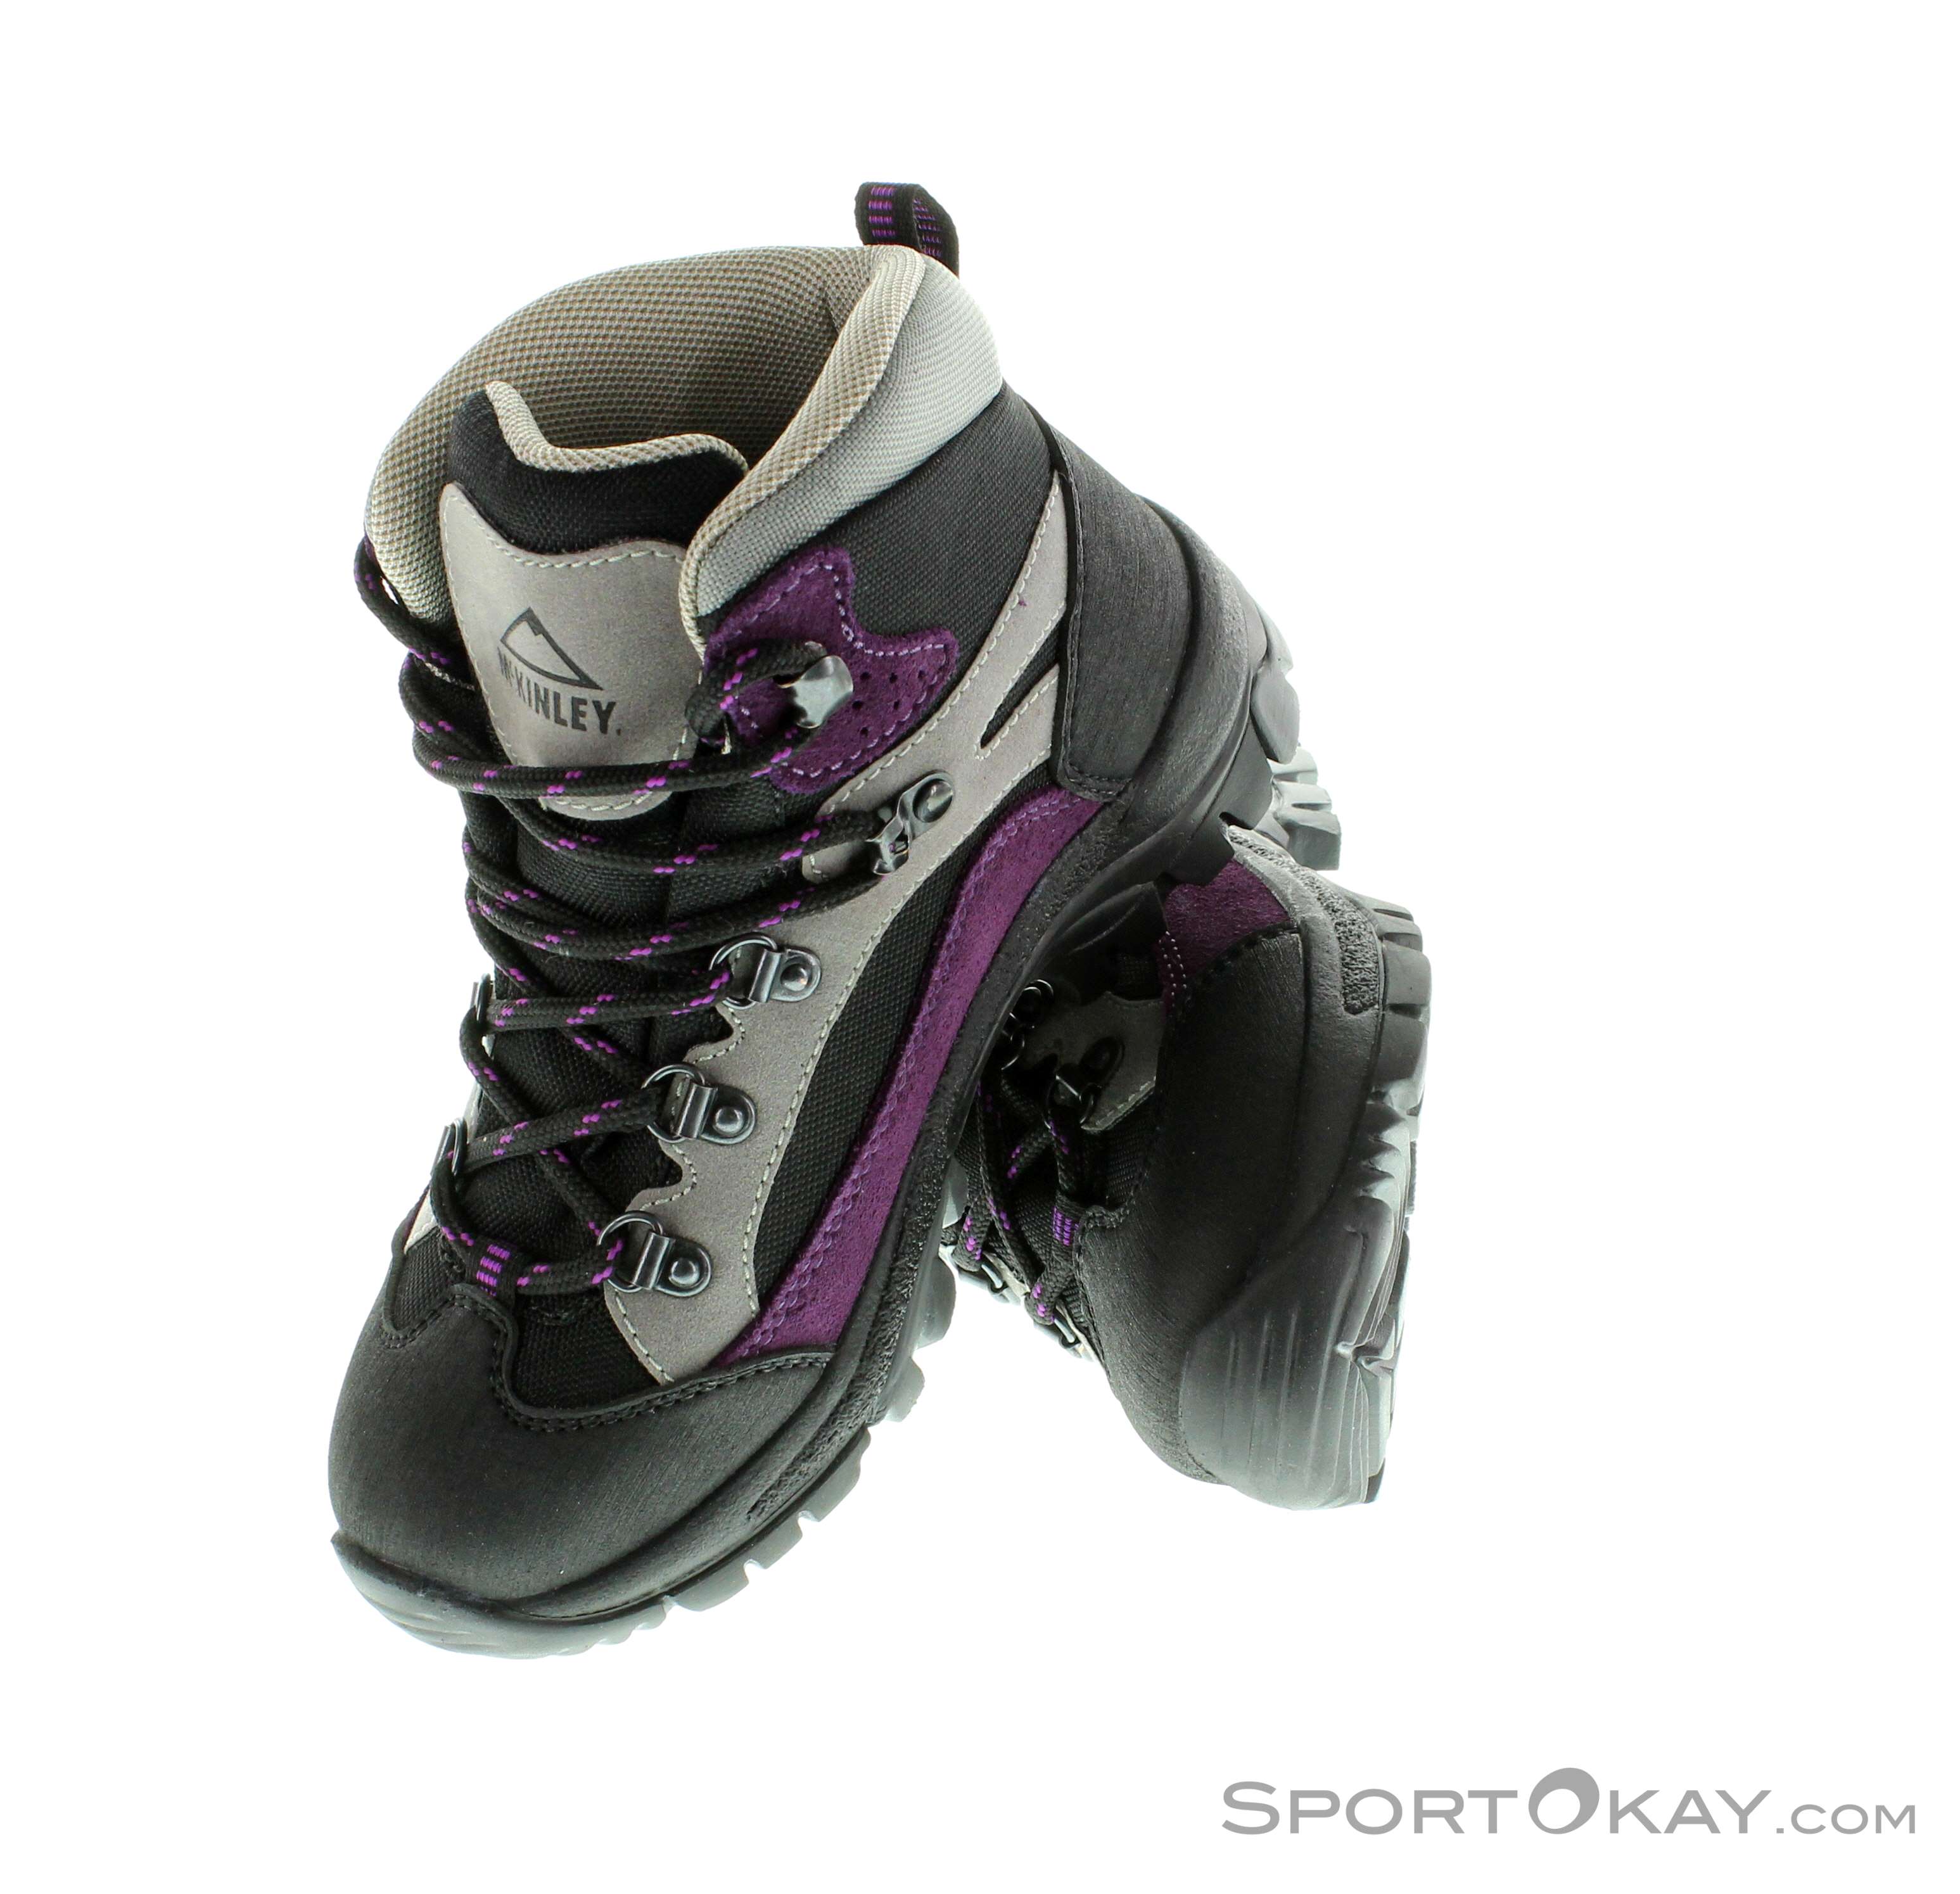 Kinder Boots Jr. All & Mountaineering - - Poles Wanderschuhe - Santiago McKinley Outdoor Shoes - AQX